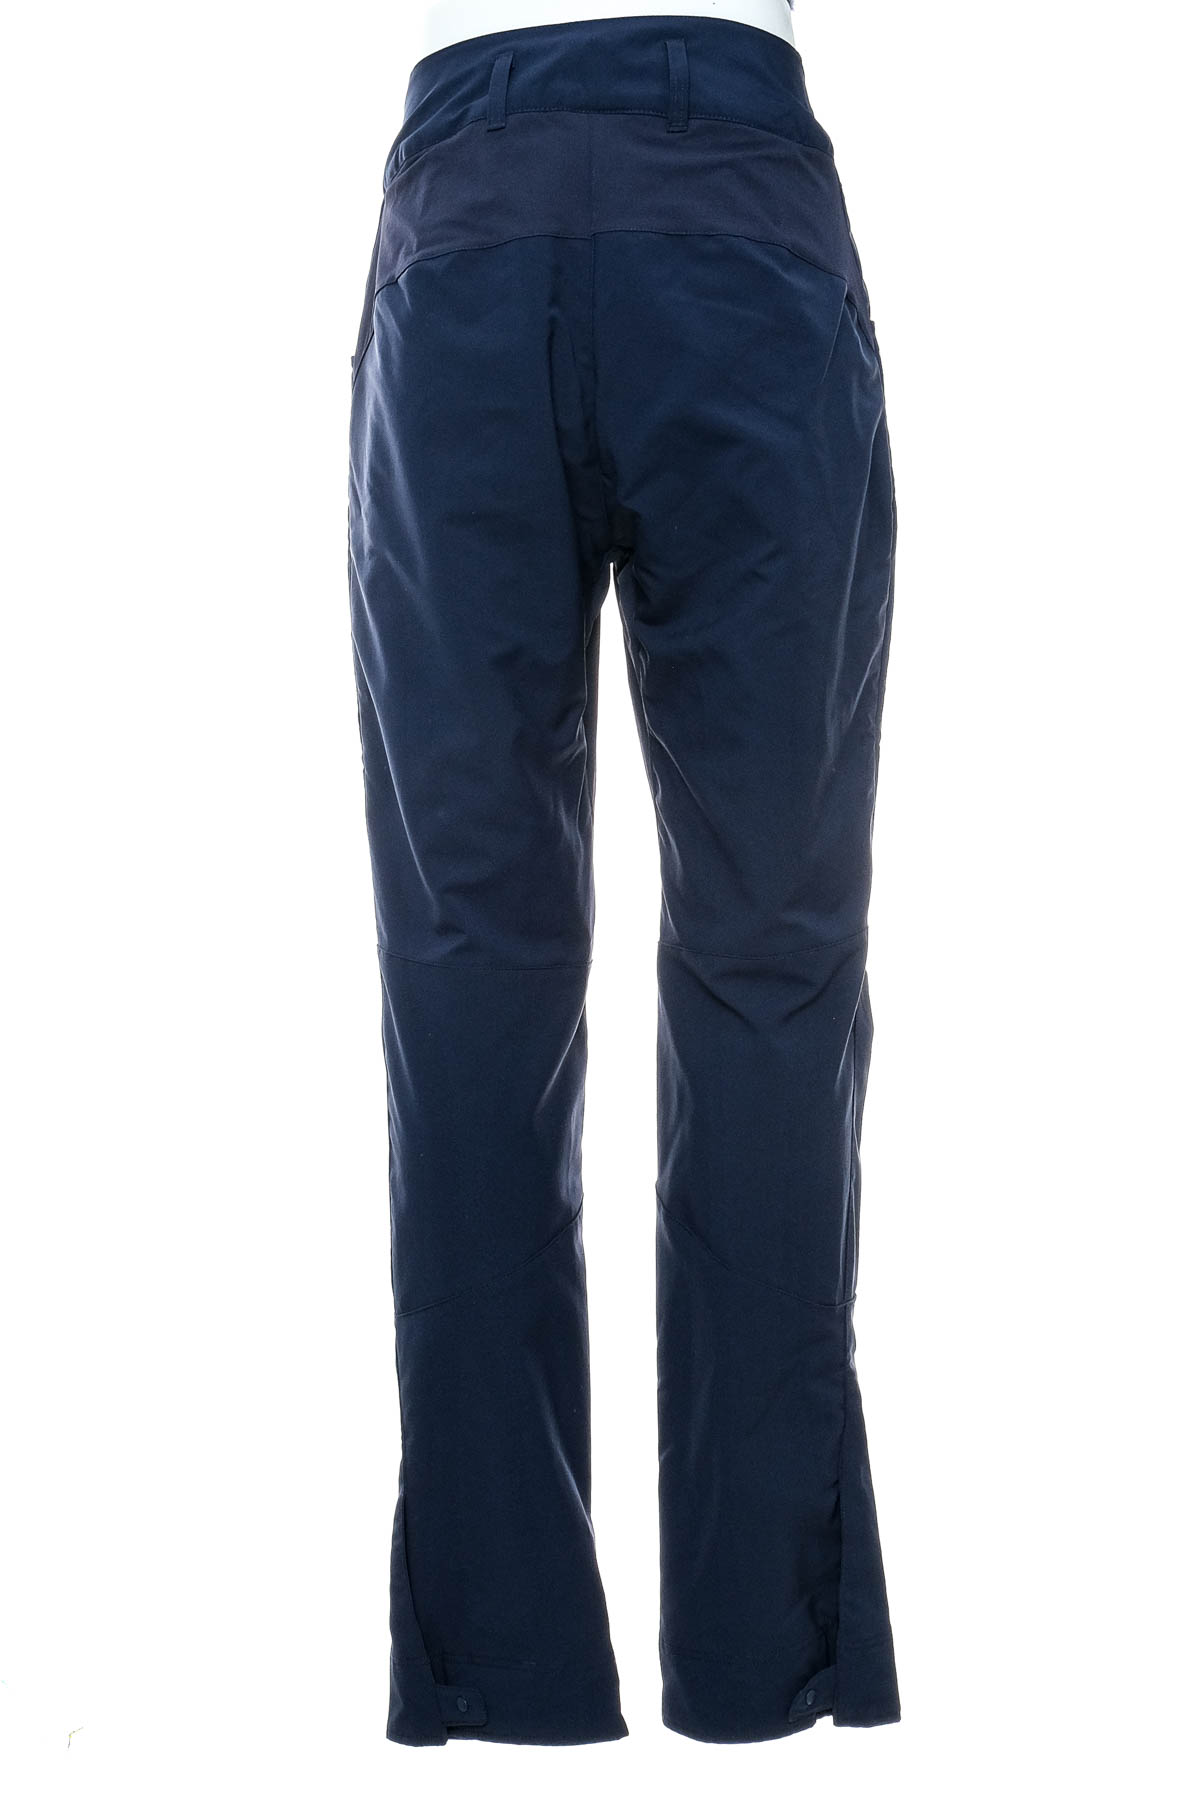 Pantalon pentru bărbați - DECATHLON - 1